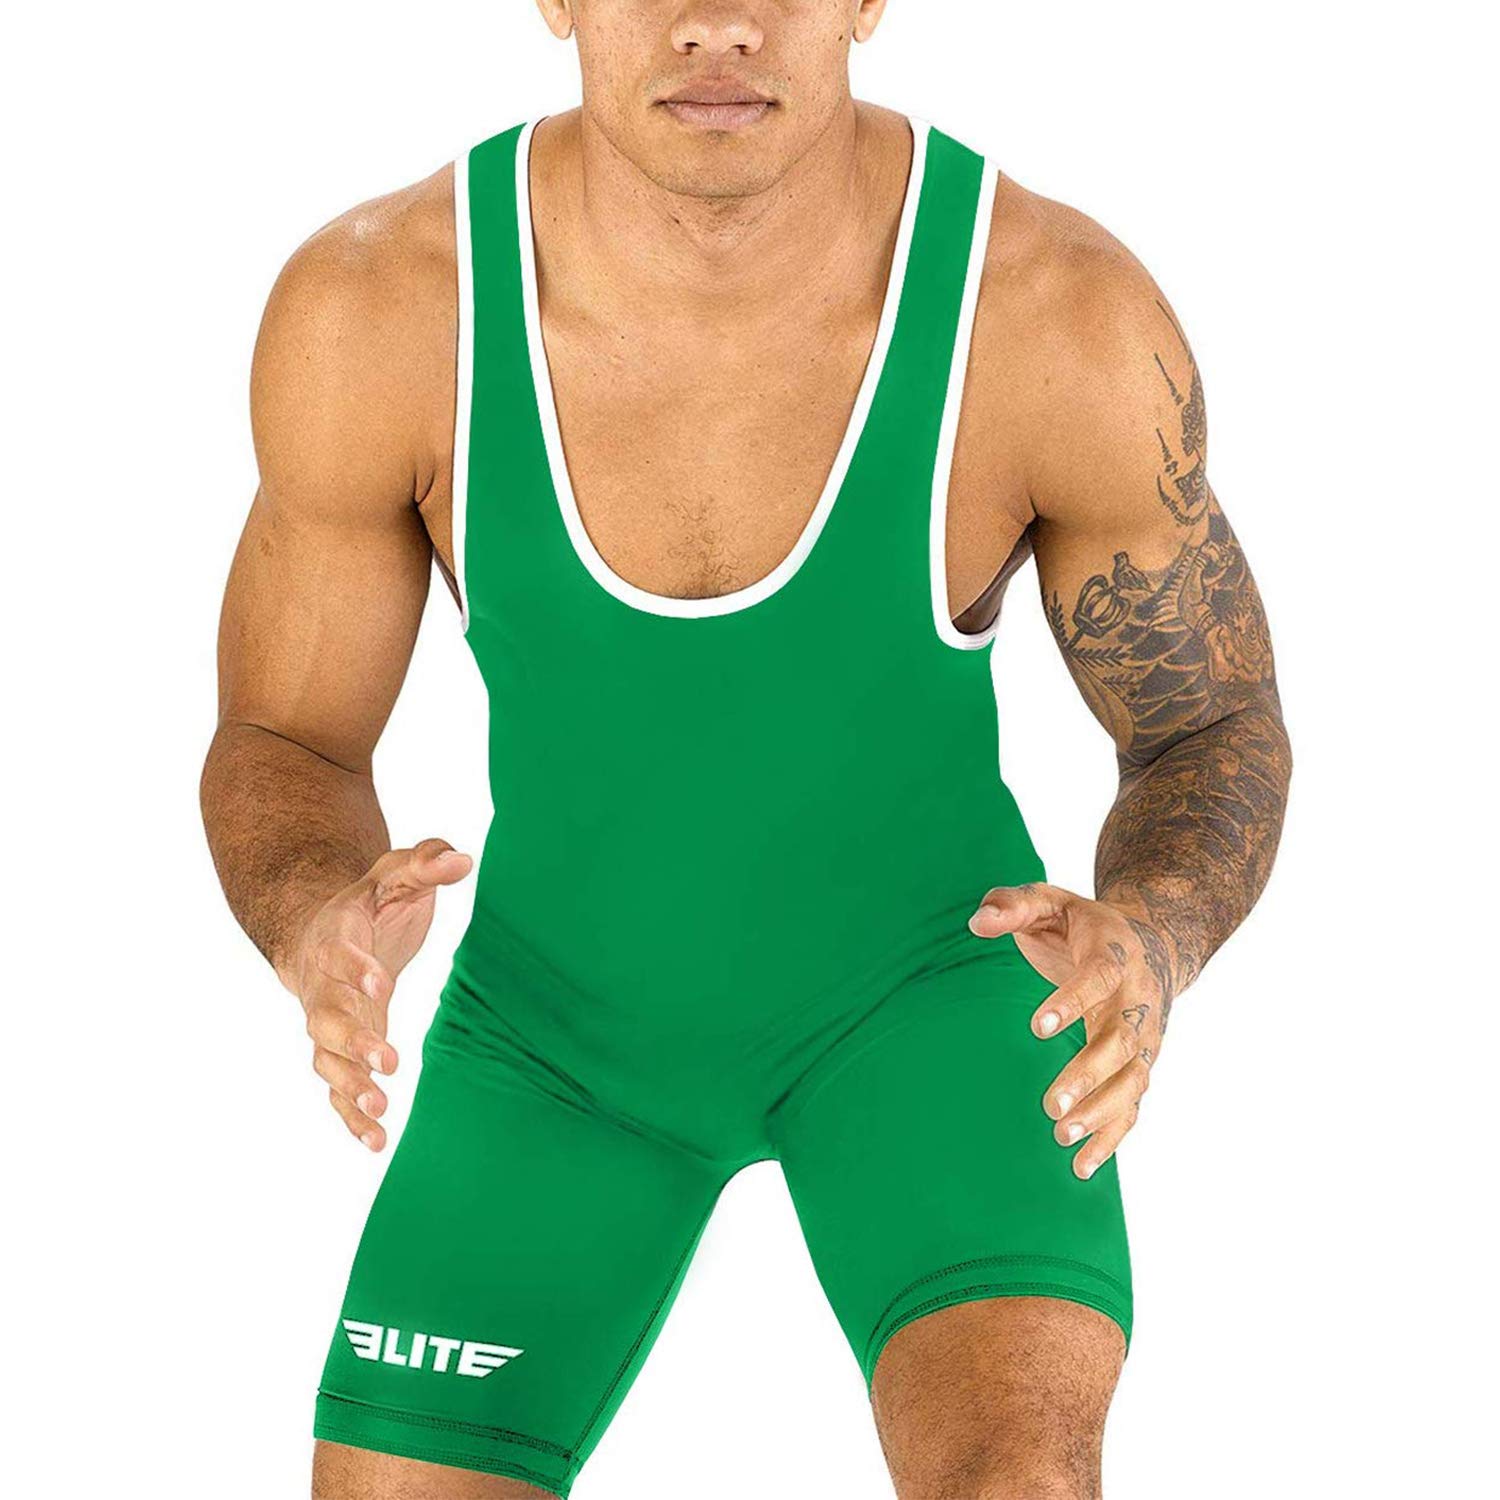 Elite Sports Menas Wrestling Singlets, Standard Singlet For Men Wrestling Uniform (Green, Medium)